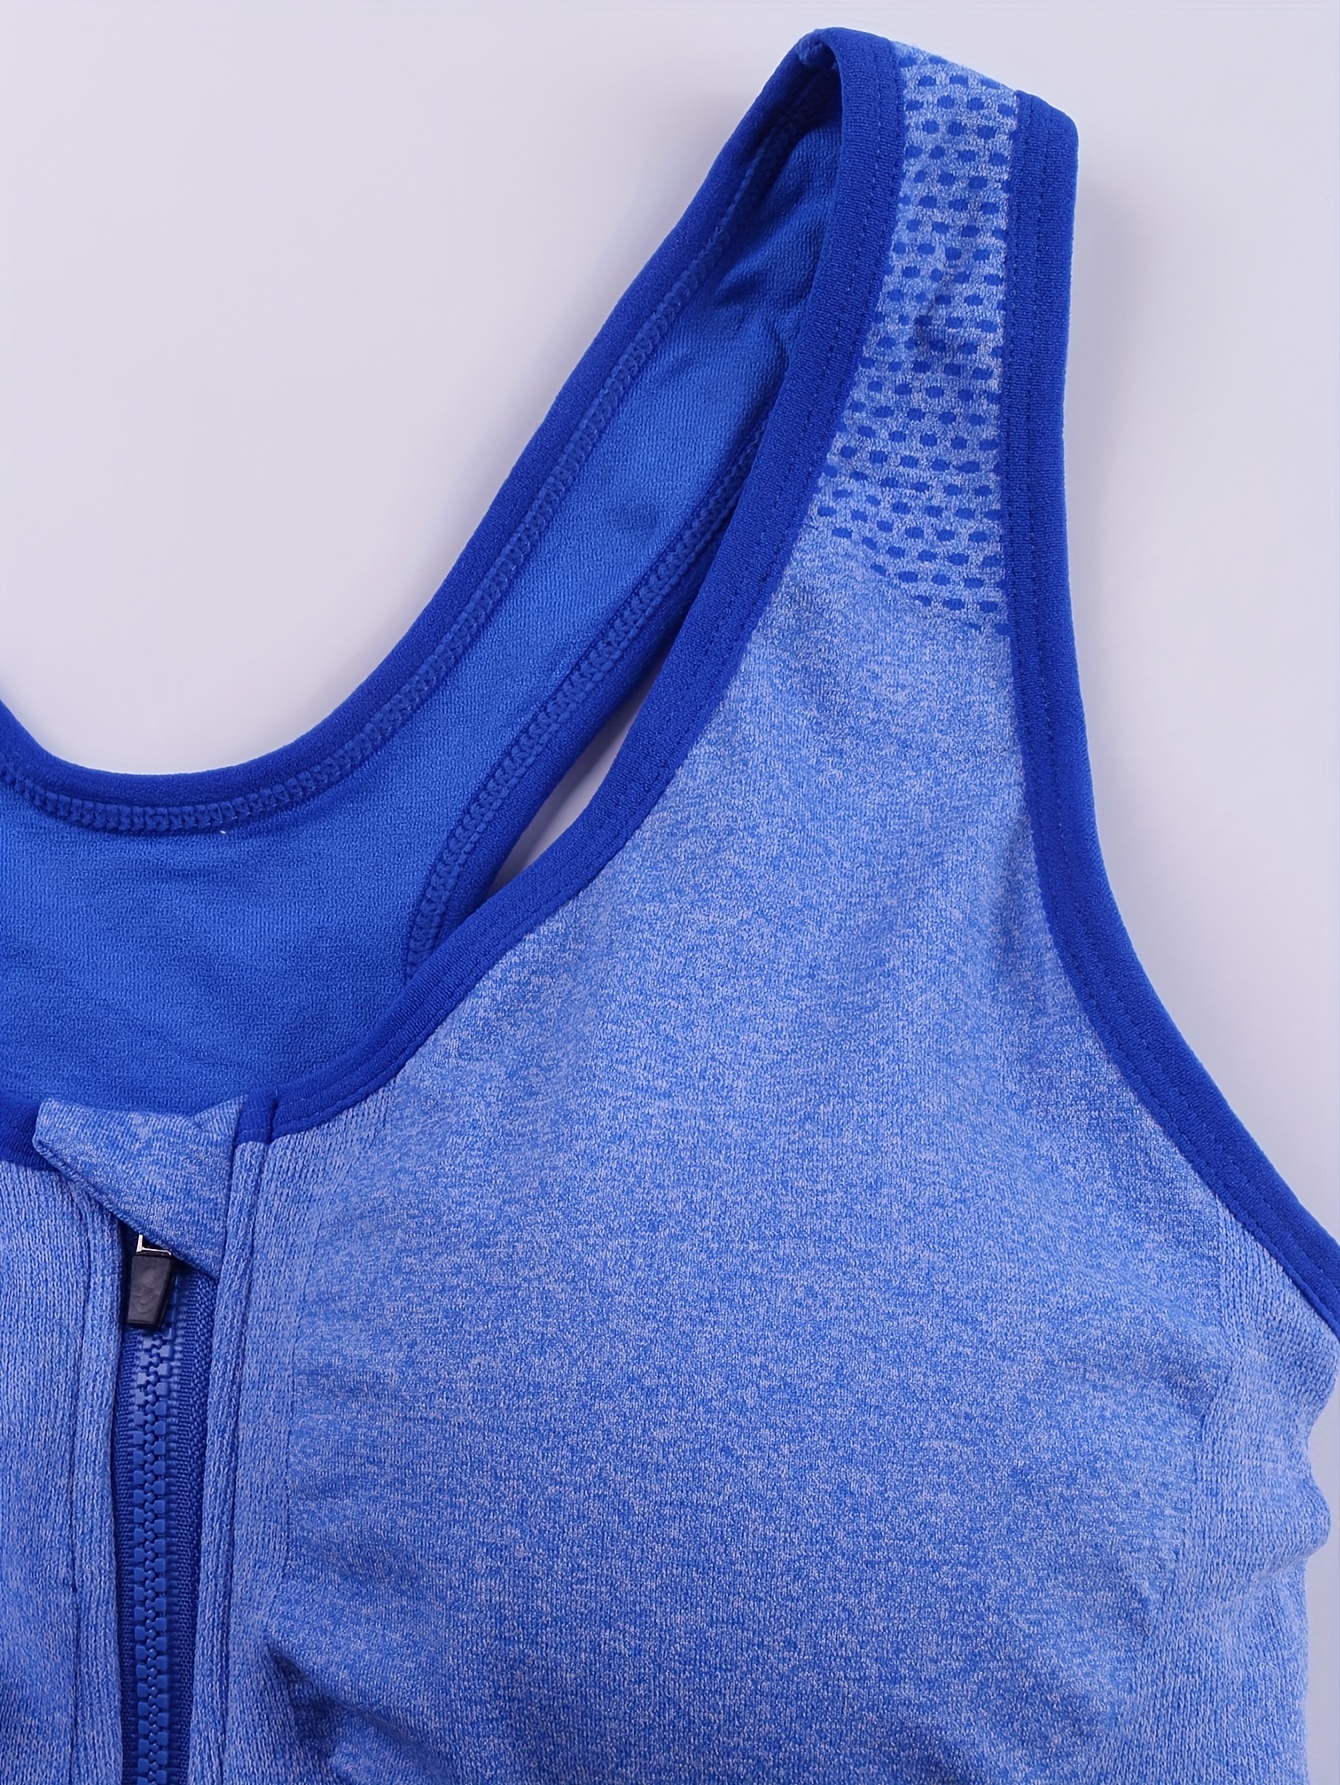 Sports Bras for Women Active Bra Yoga Vest Front Zipper Large Size